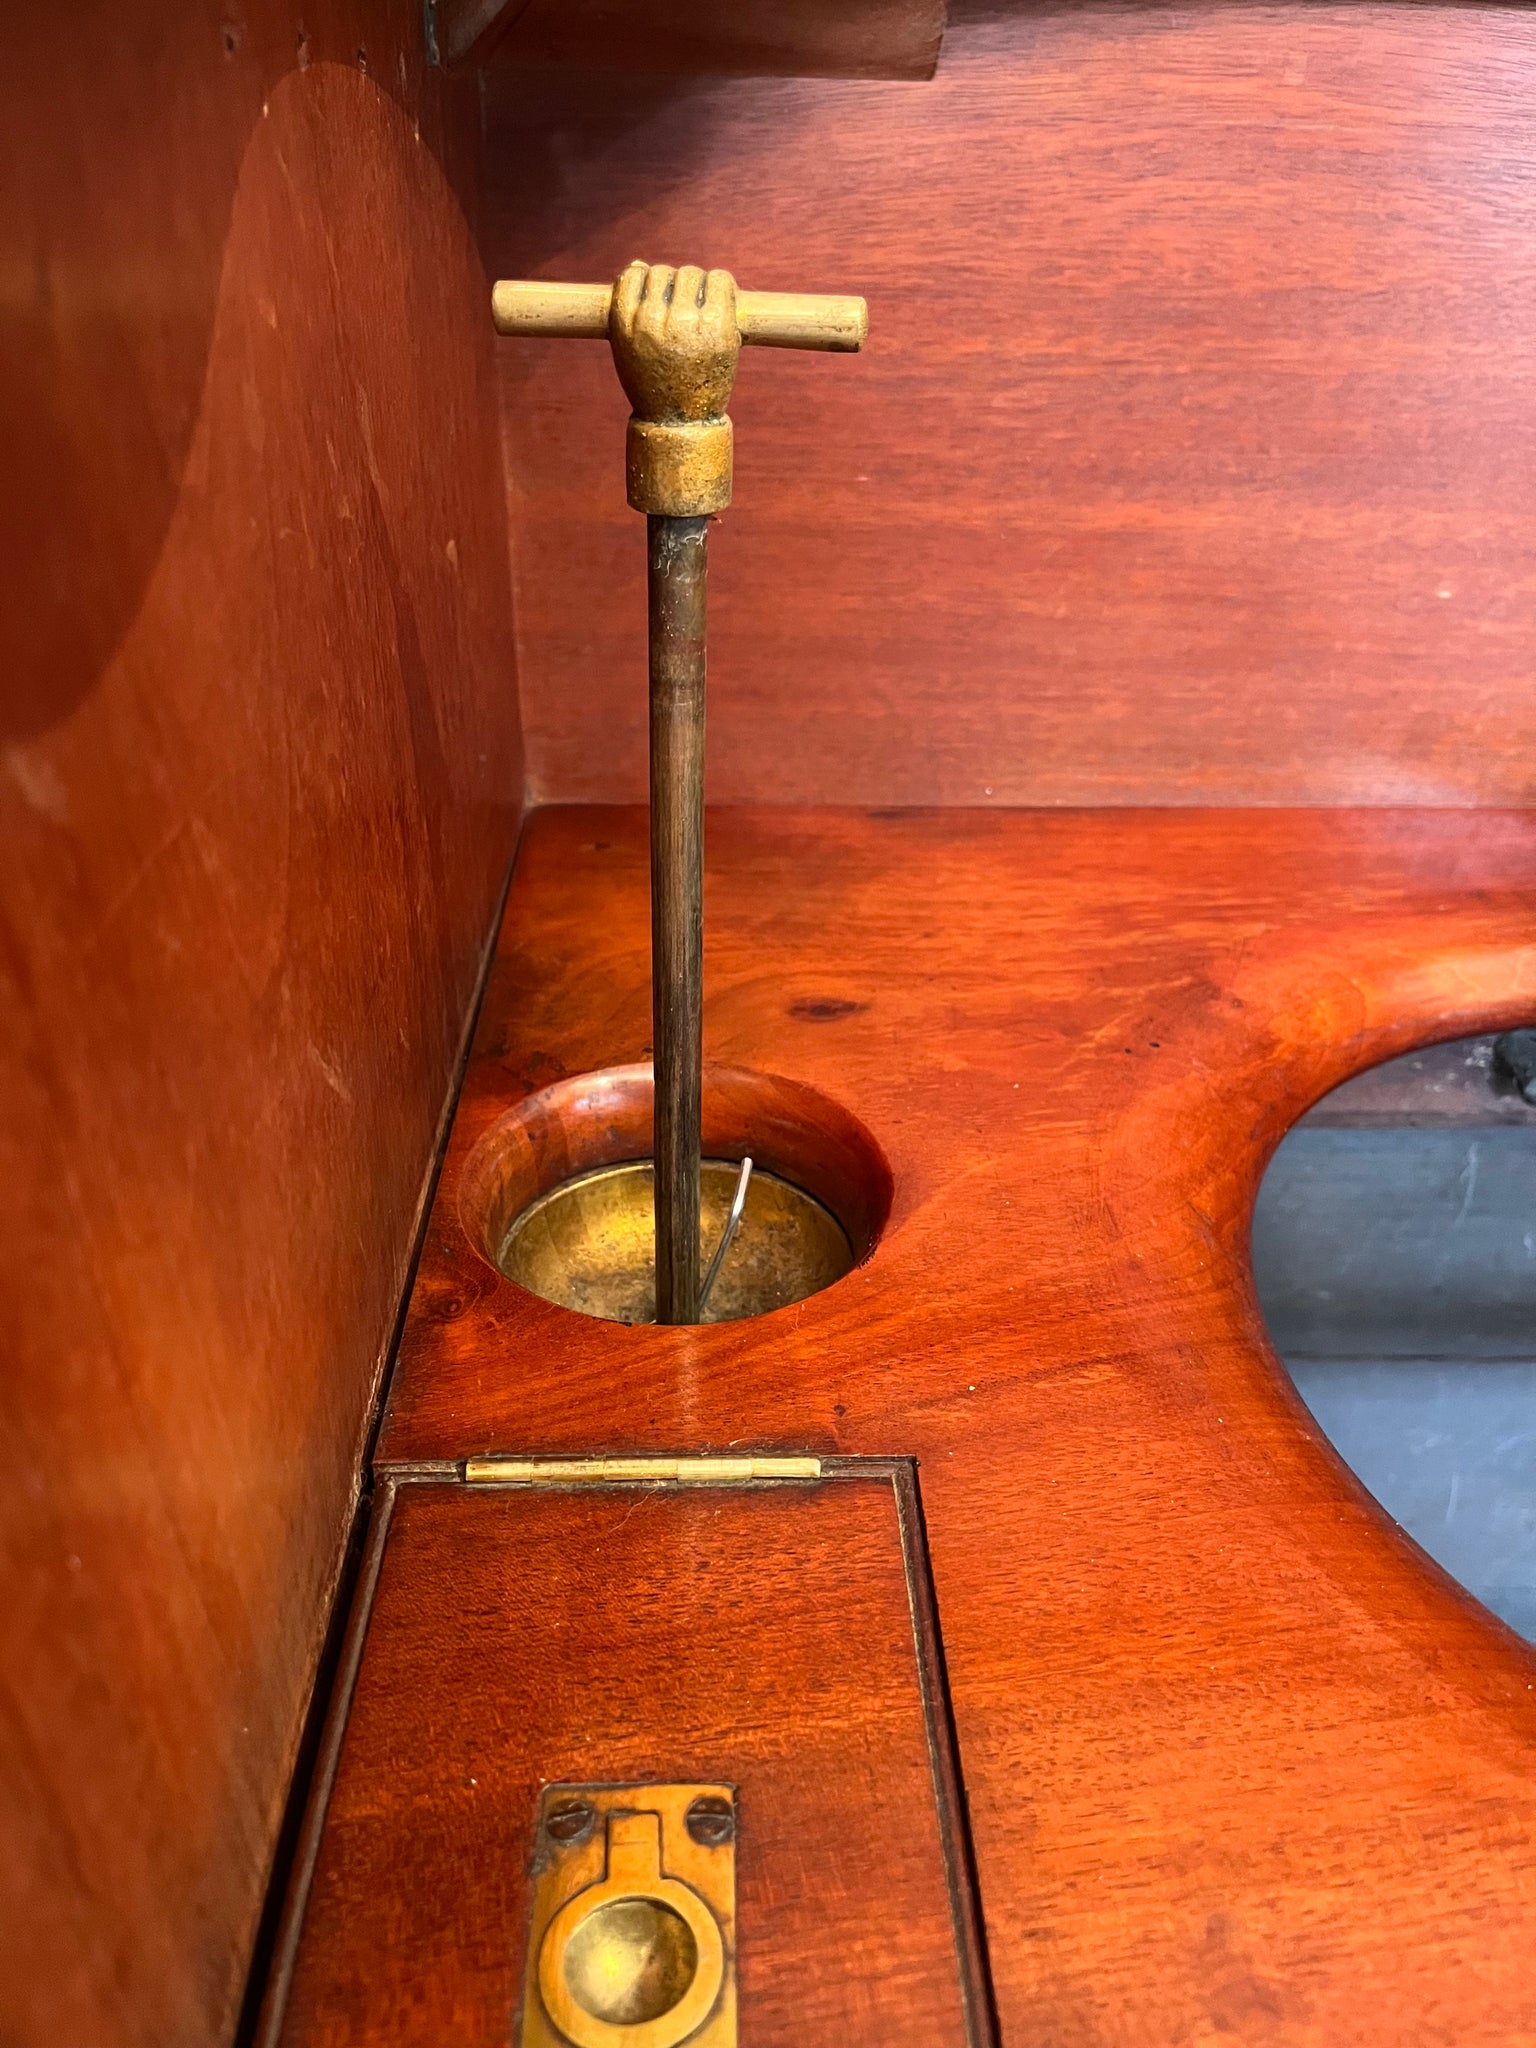 Victorian Mahogany Thunder-Box Commode with Original Brassware C.1840